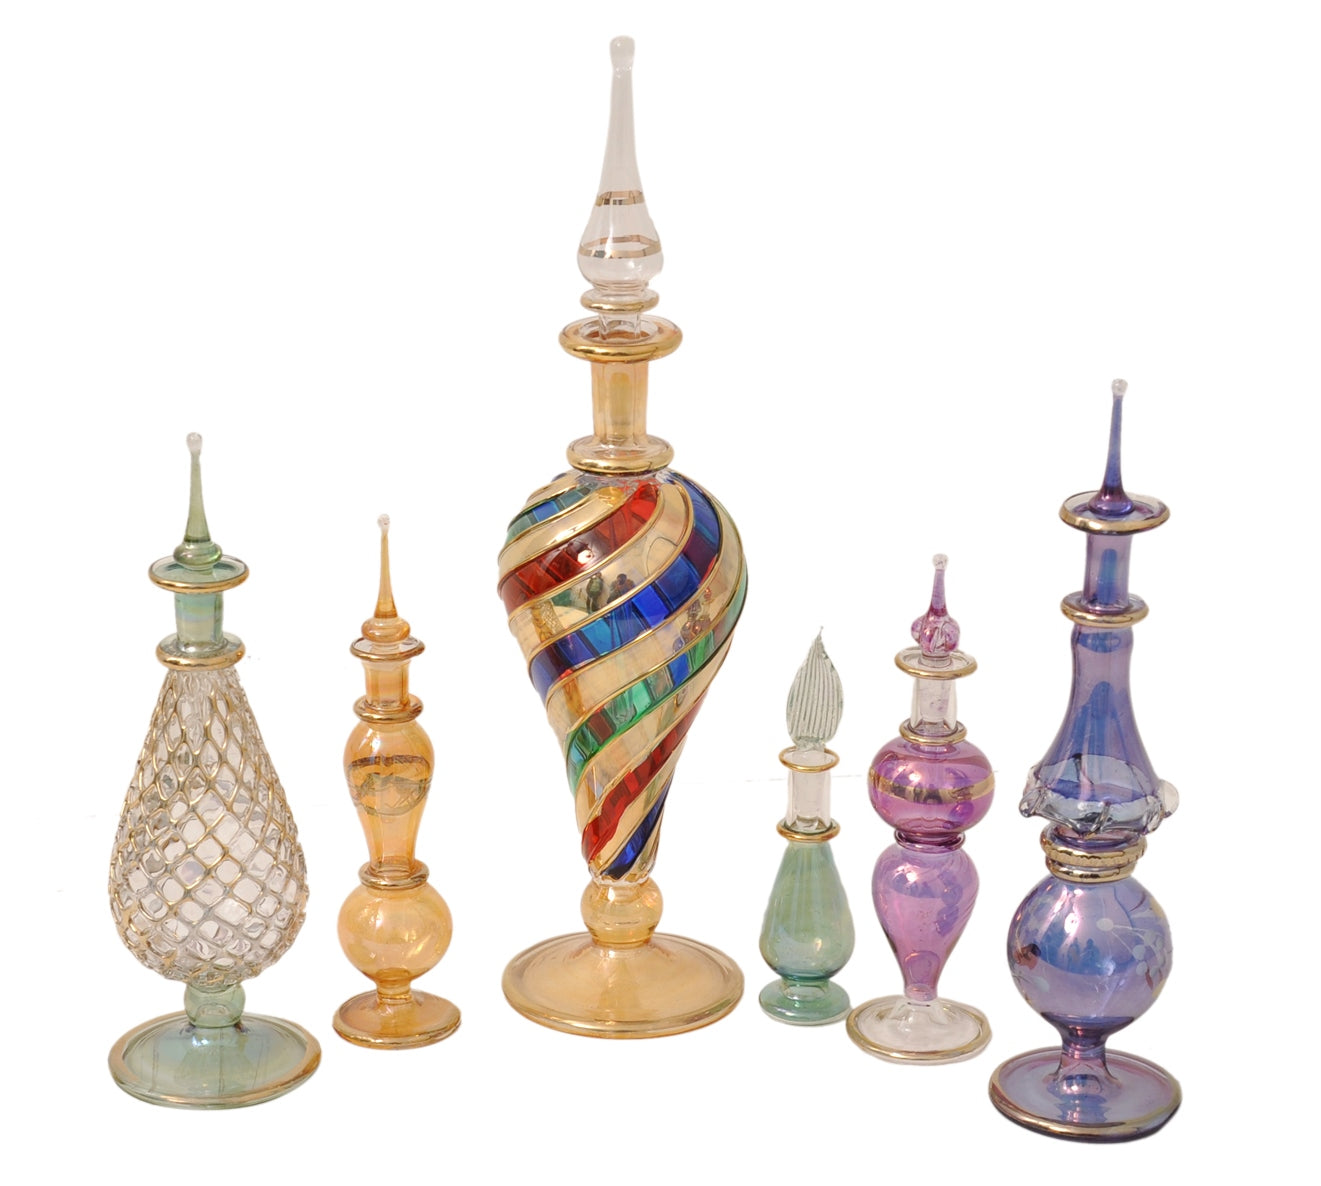 Genie Blown Glass Potion potions decorative miniature decorative Egyptian Perfume bottles Mix set of 6pc by CraftsOfEgypt